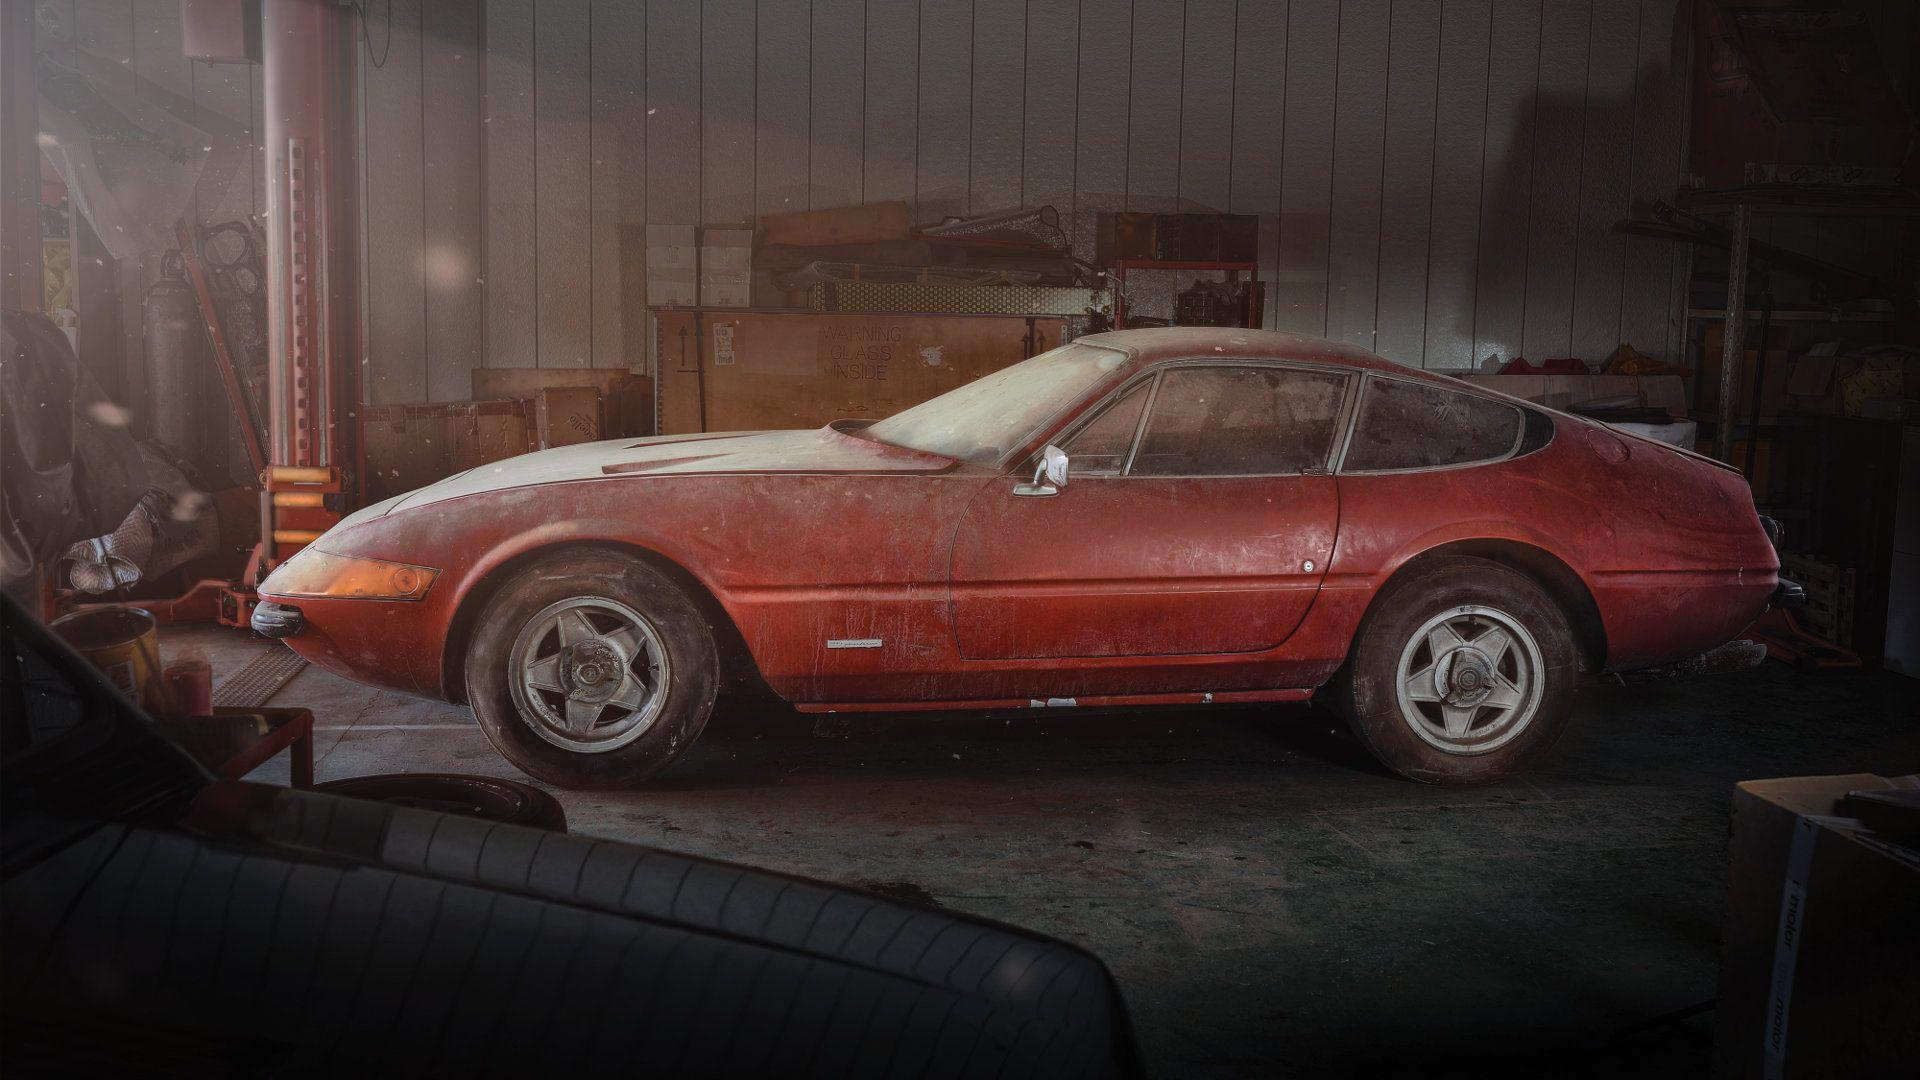 Ferrari Daytona 'Alloy' Barn Find Brings $2.1M At Auction [UPDATE]